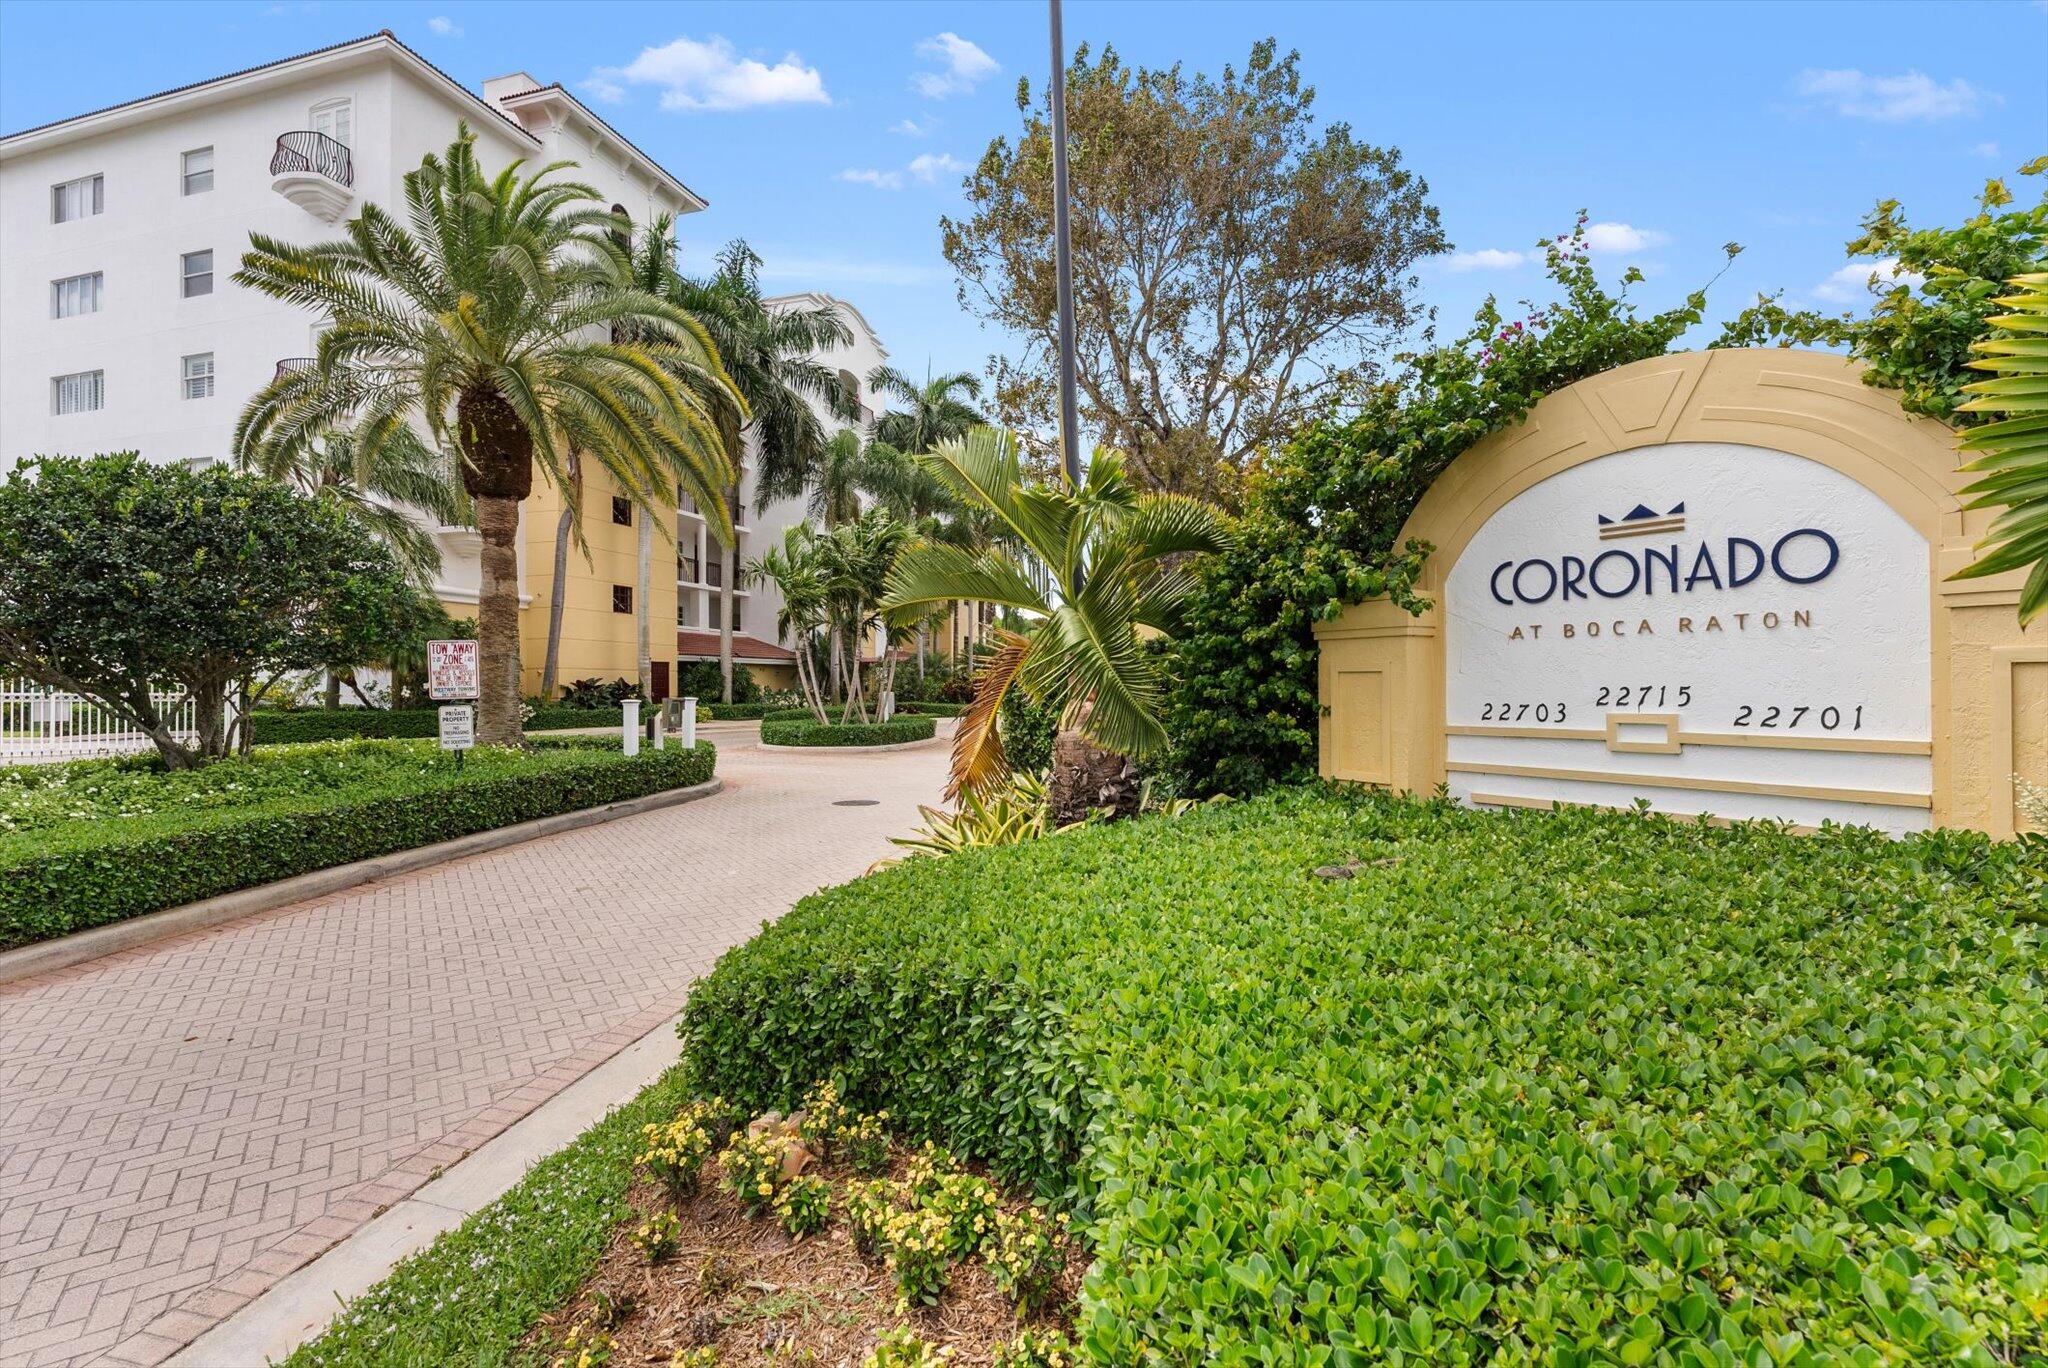 Property for Sale at 22715 Camino Del Mar 55, Boca Raton, Palm Beach County, Florida - Bedrooms: 3 
Bathrooms: 2  - $485,000